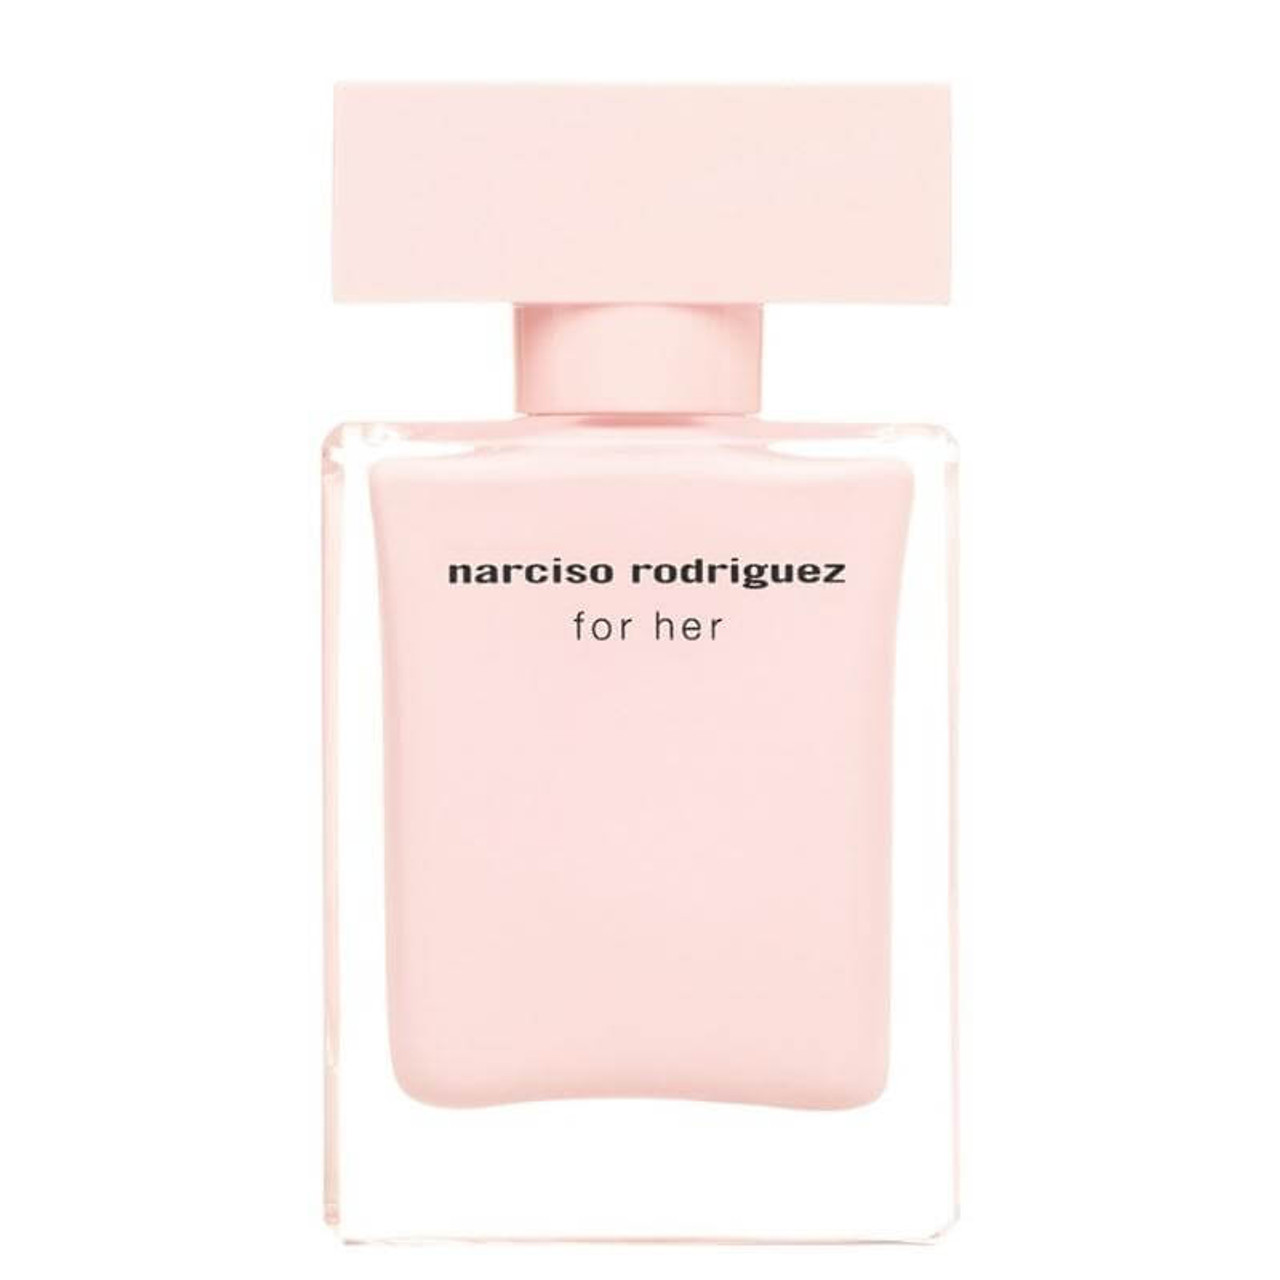 Kærlig dejligt at møde dig tage ned Narciso Rodriguez for her Eau de Parfum Spray 30ml : BeautyFeatures.ie